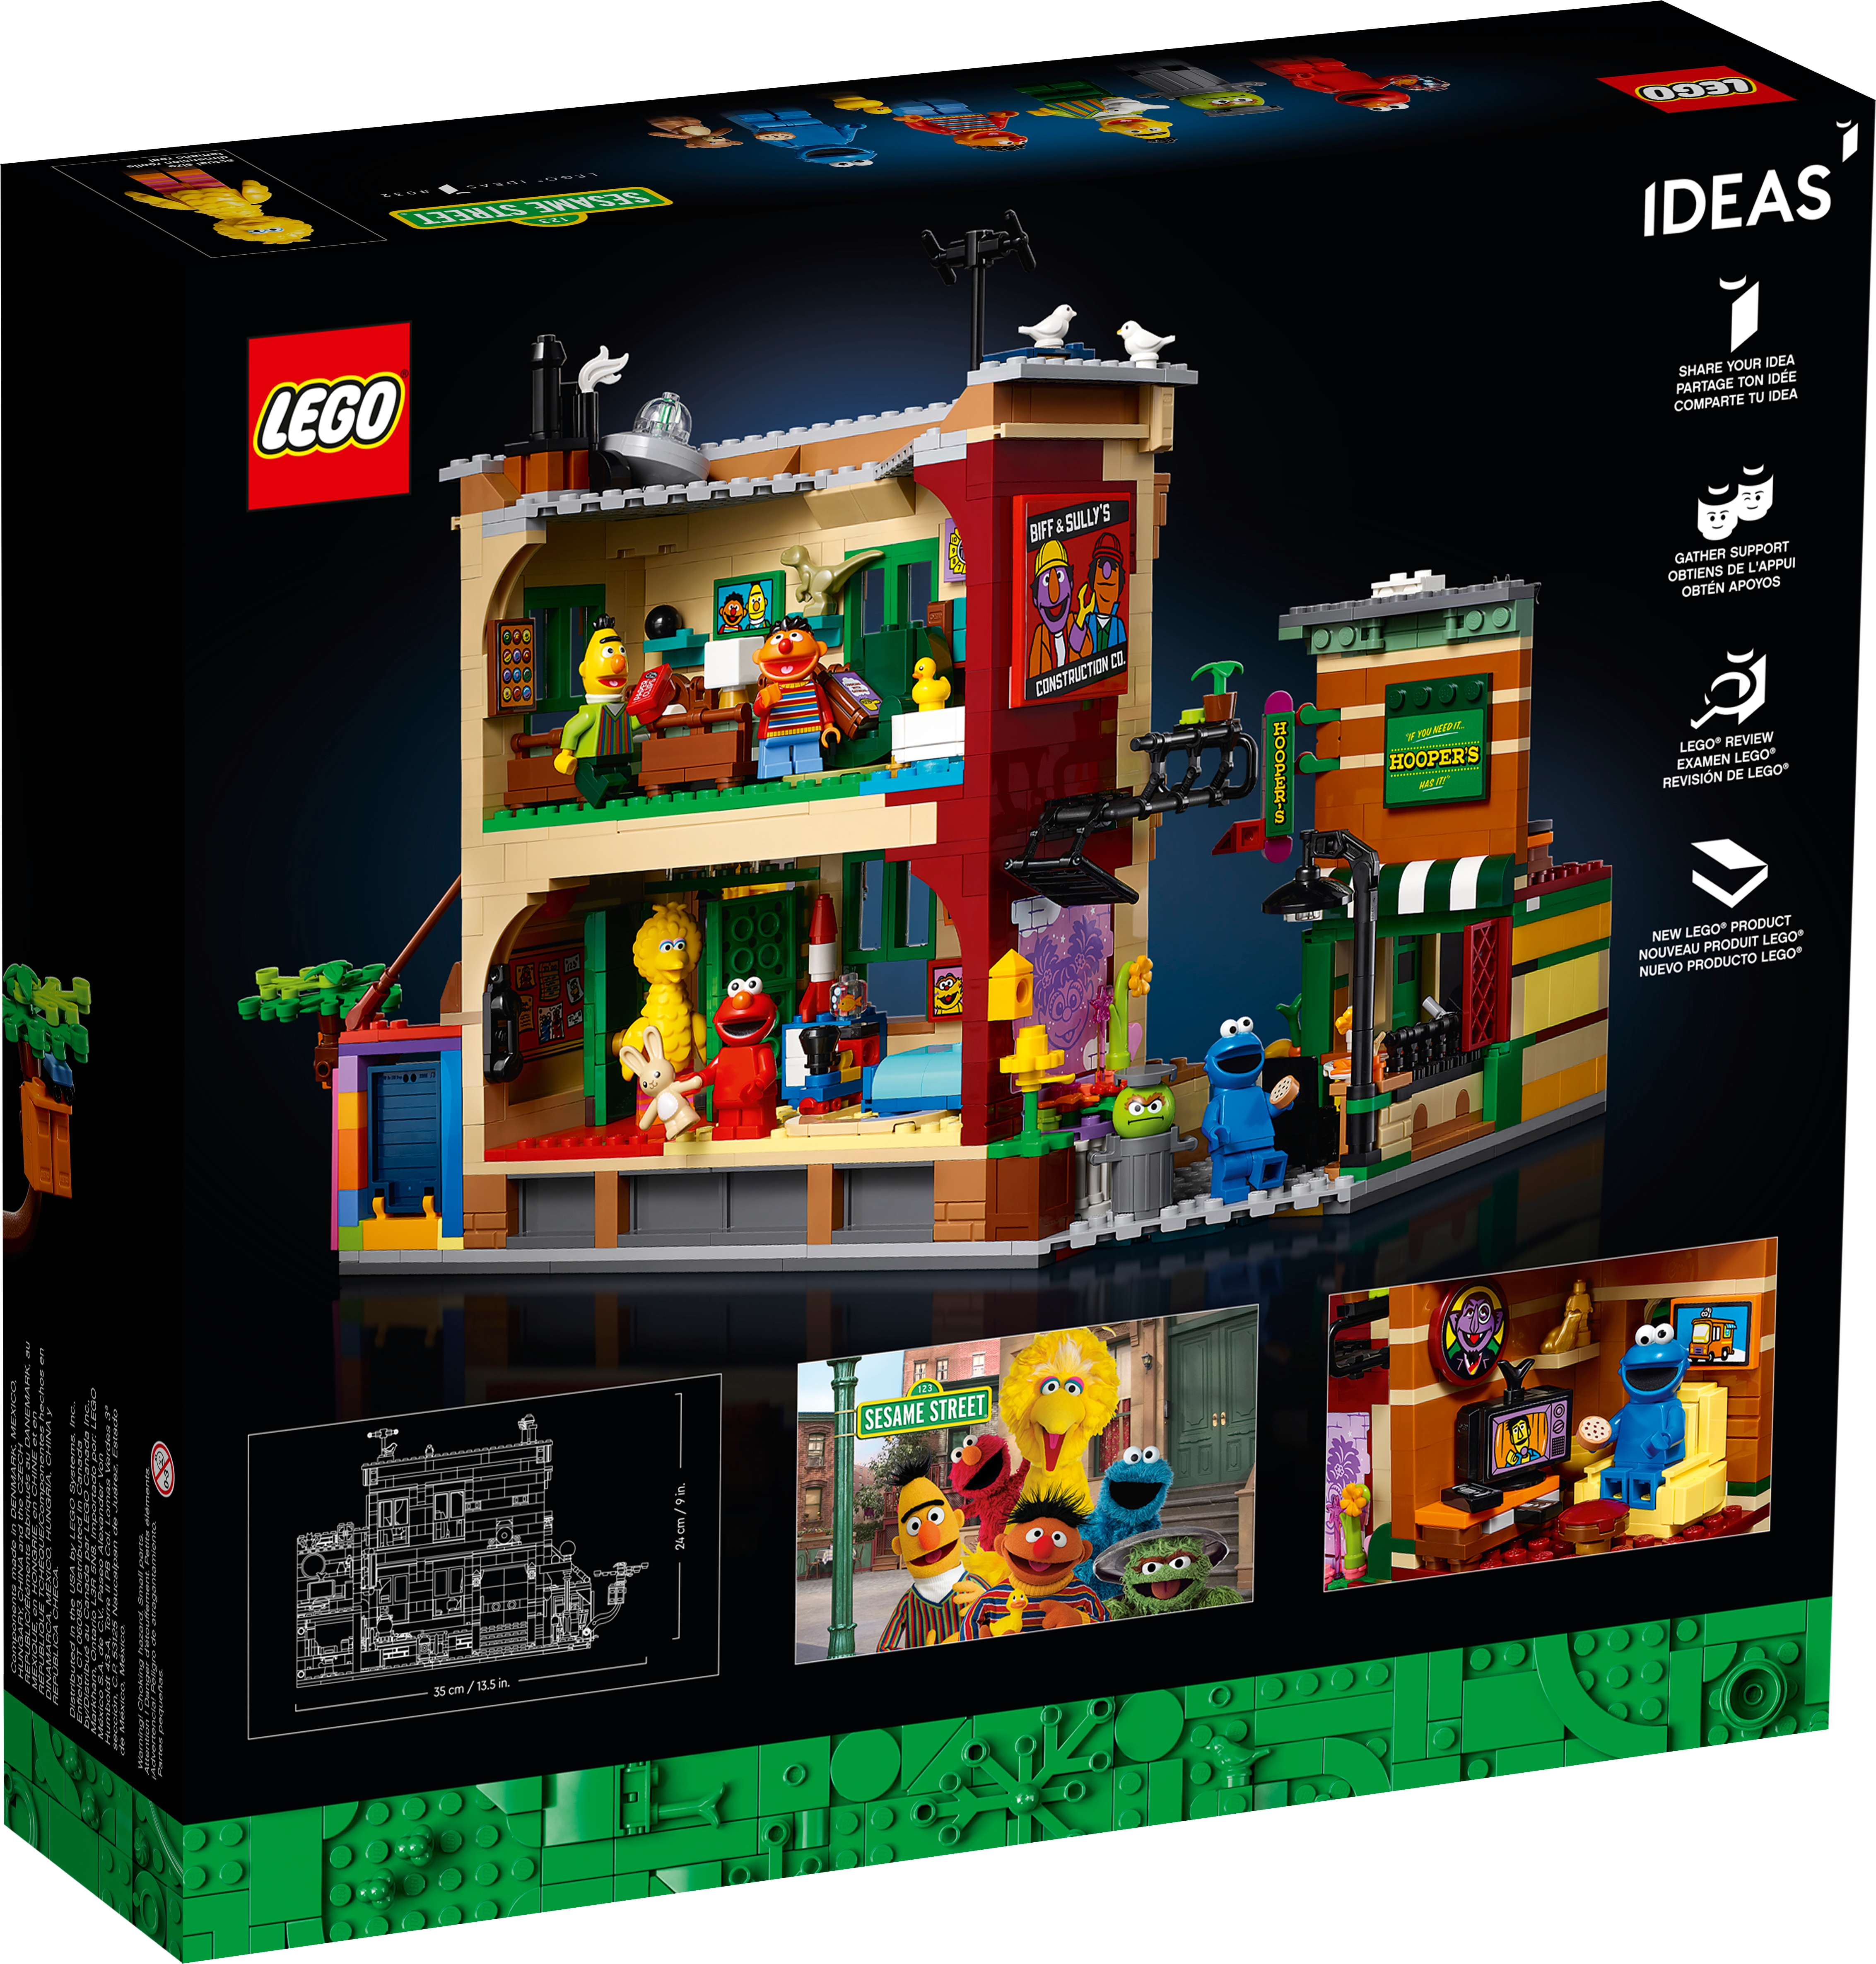 Lego Sesame Street